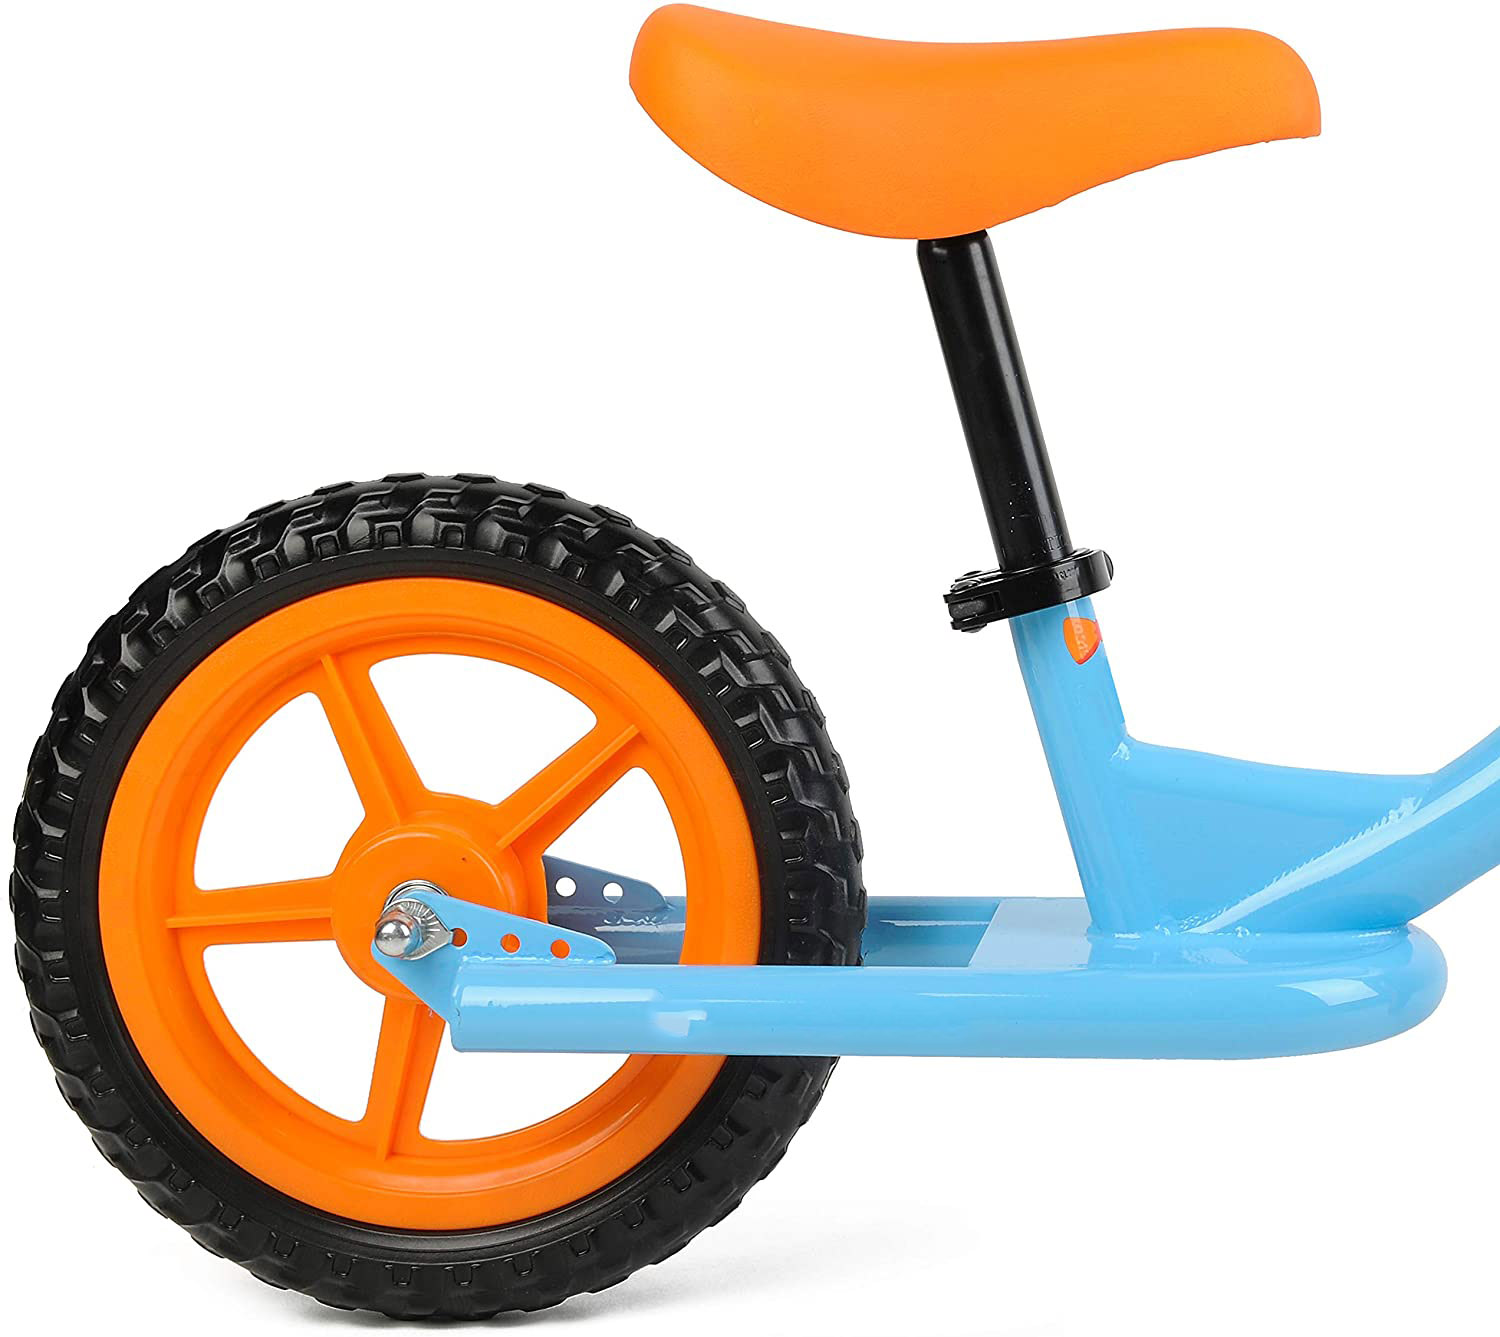 Trike Baby walker Toddler Bike Learn to Ride Bicycle Ride On Toy Boy Girl Gift Ultralight Full Carbon Children Balance Bike